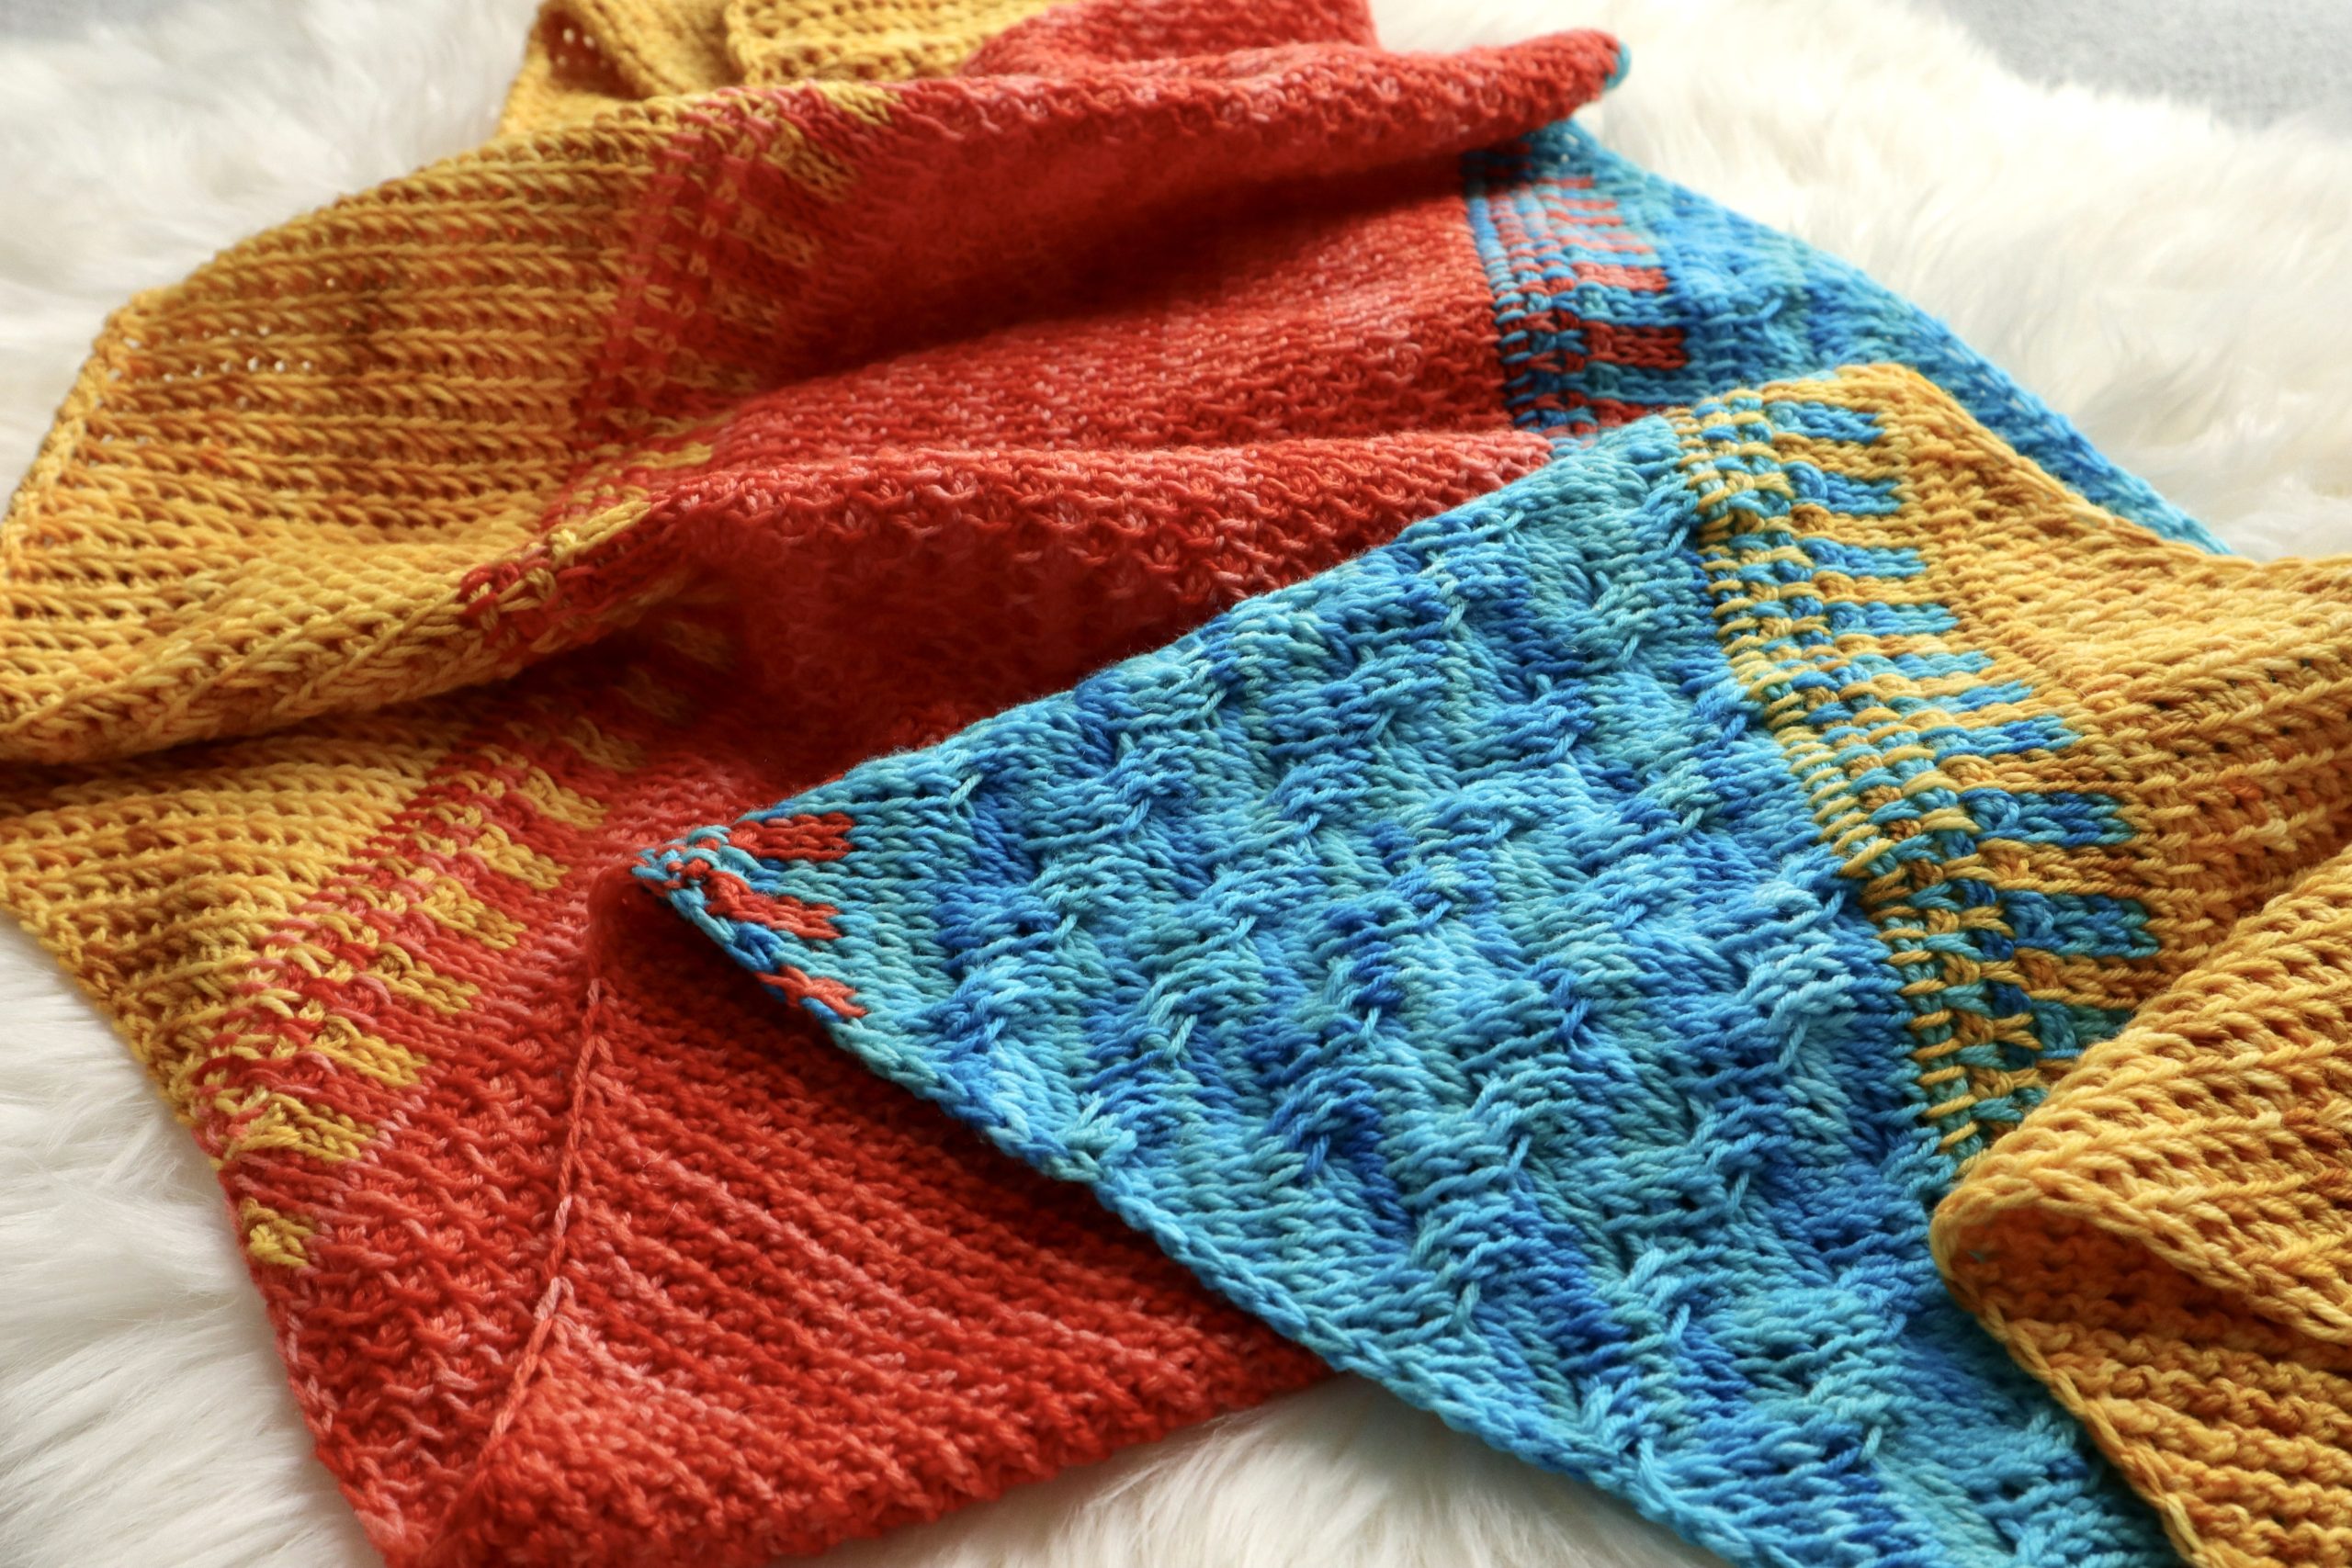 Seasonal Crochet Kit: Holiday Hooks - Fall Themed Learn to Crochet